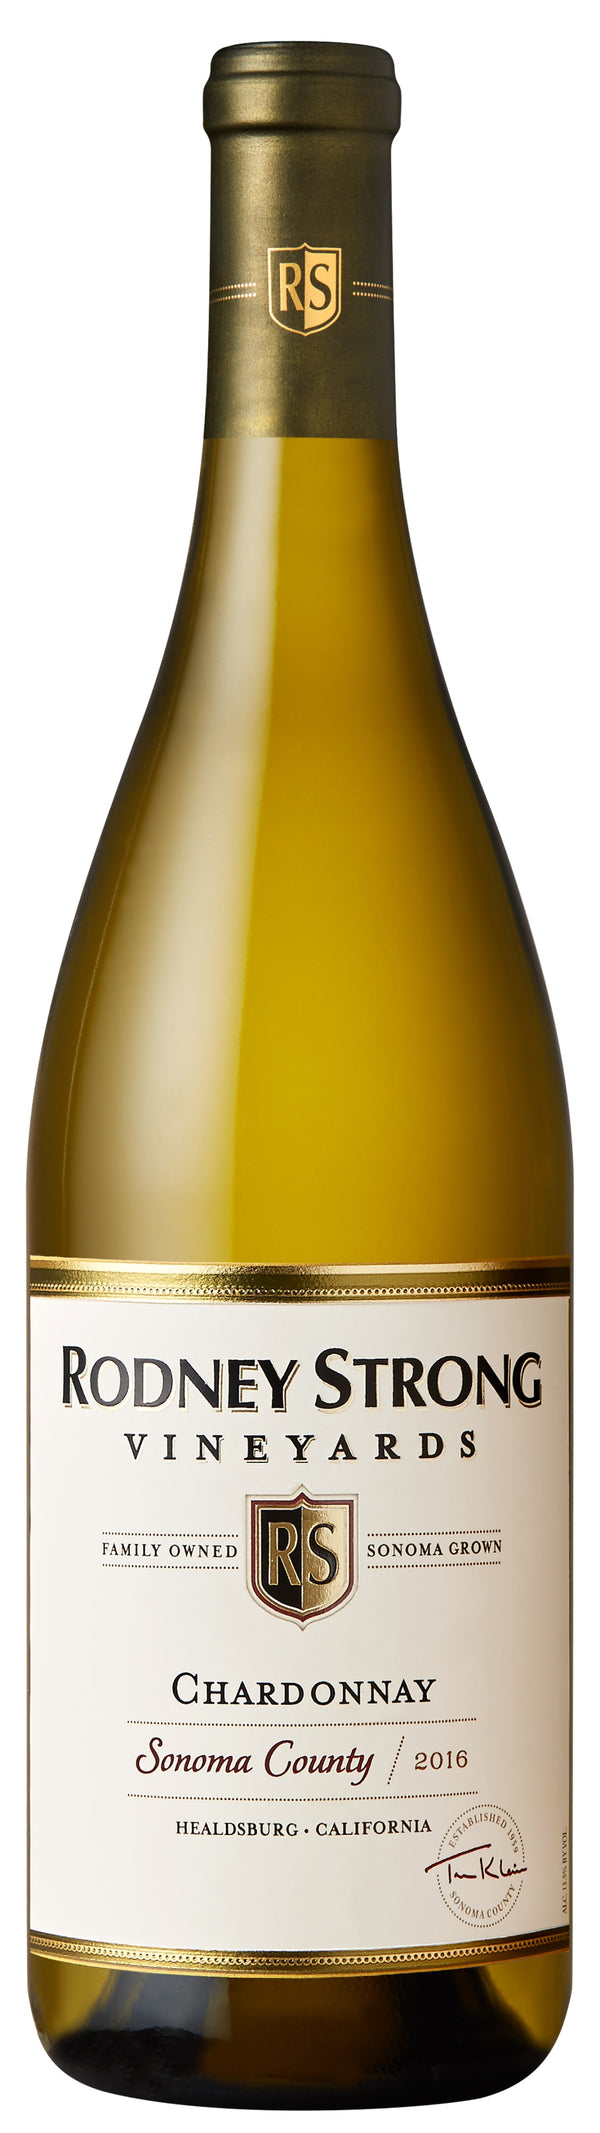 Rodney Strong Sonoma Coast Chardonnay